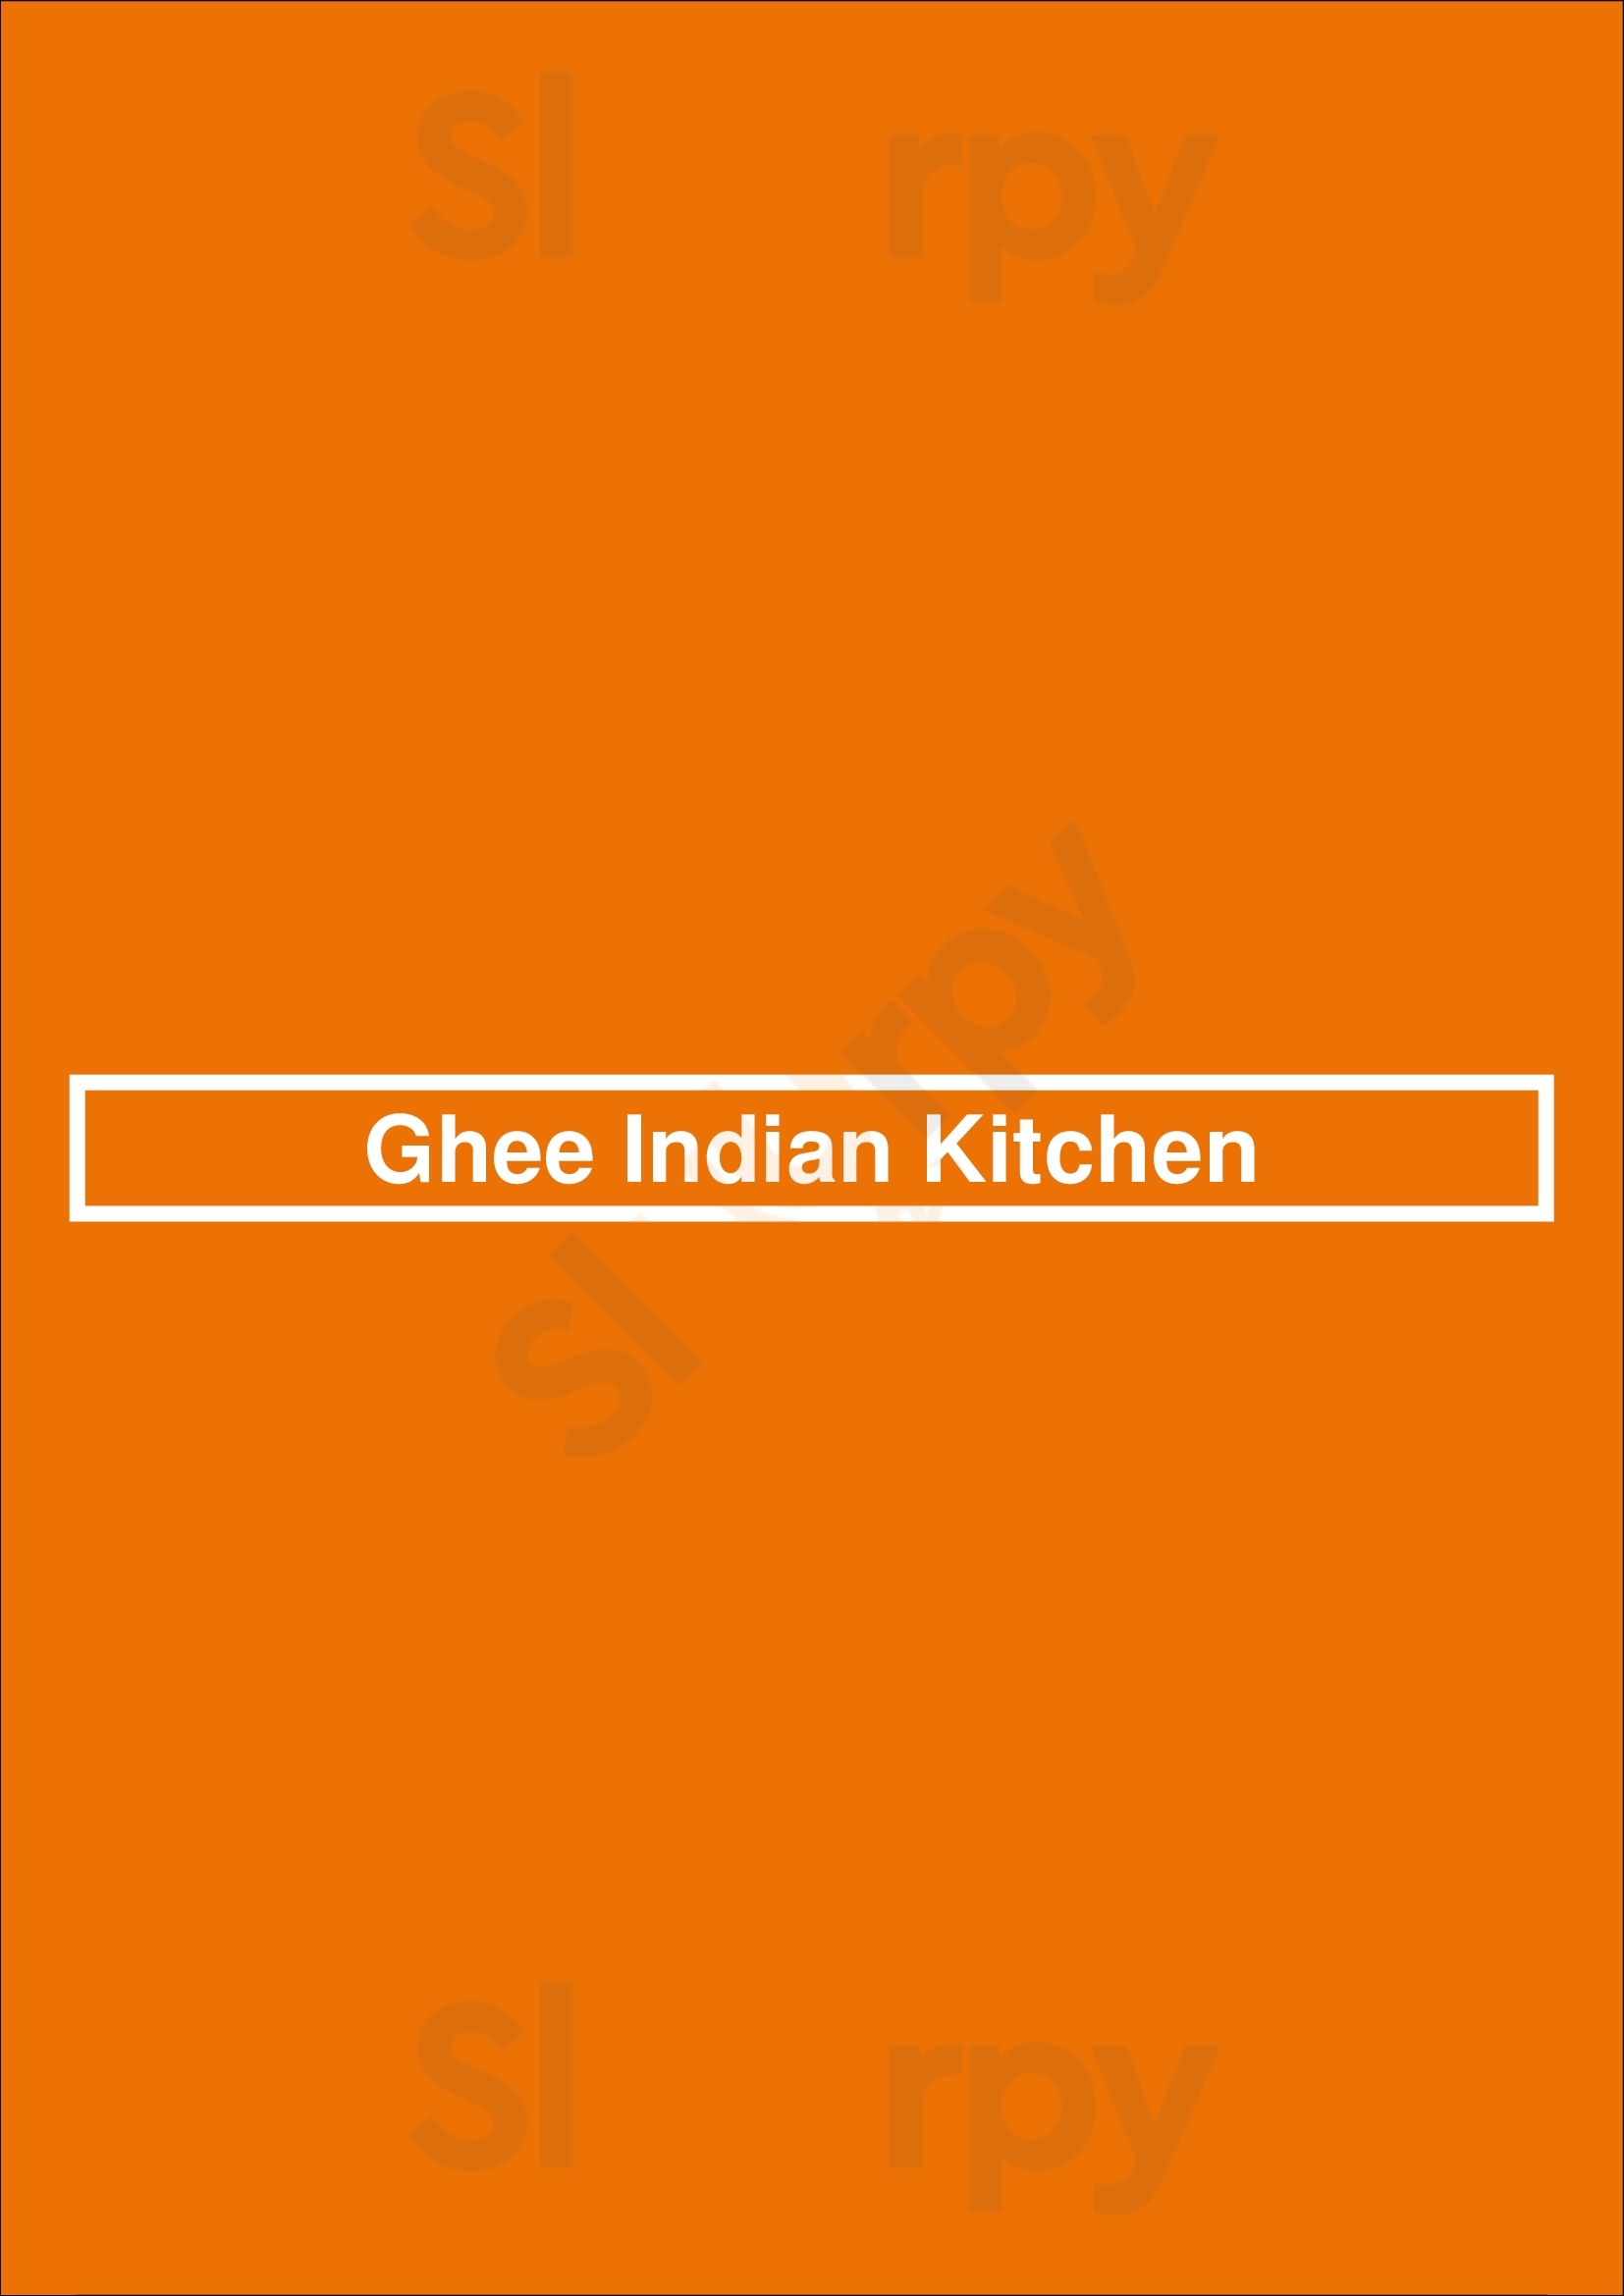 Ghee Indian Kitchen Miami Menu - 1